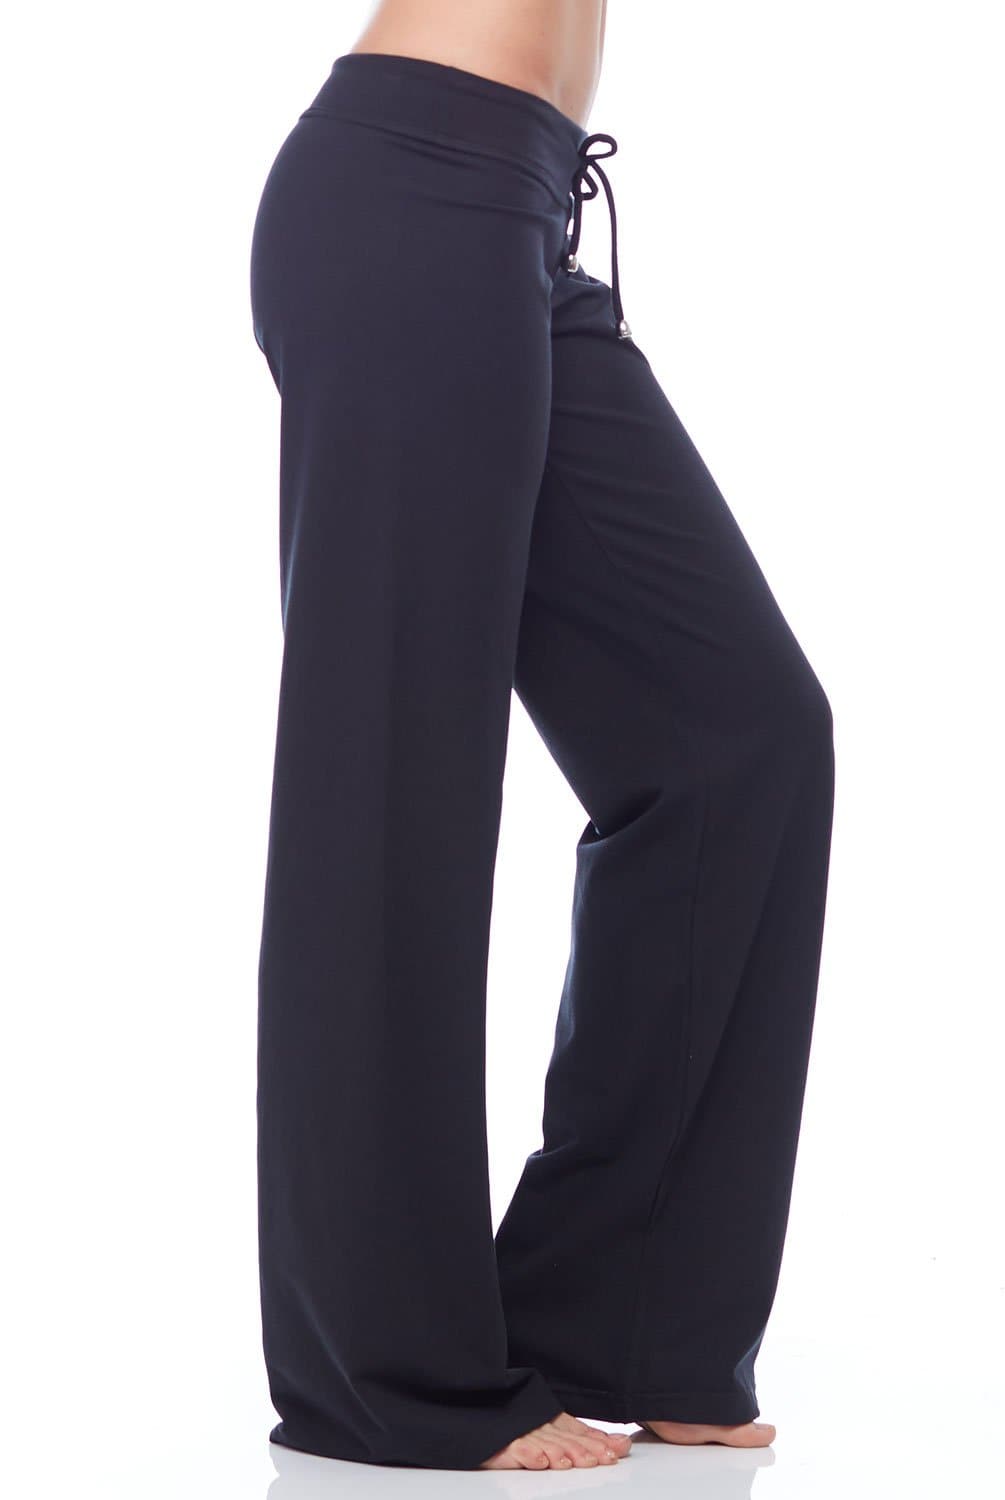 Sandra McCray Flat Drawstring Pant - Evolve Fit Wear